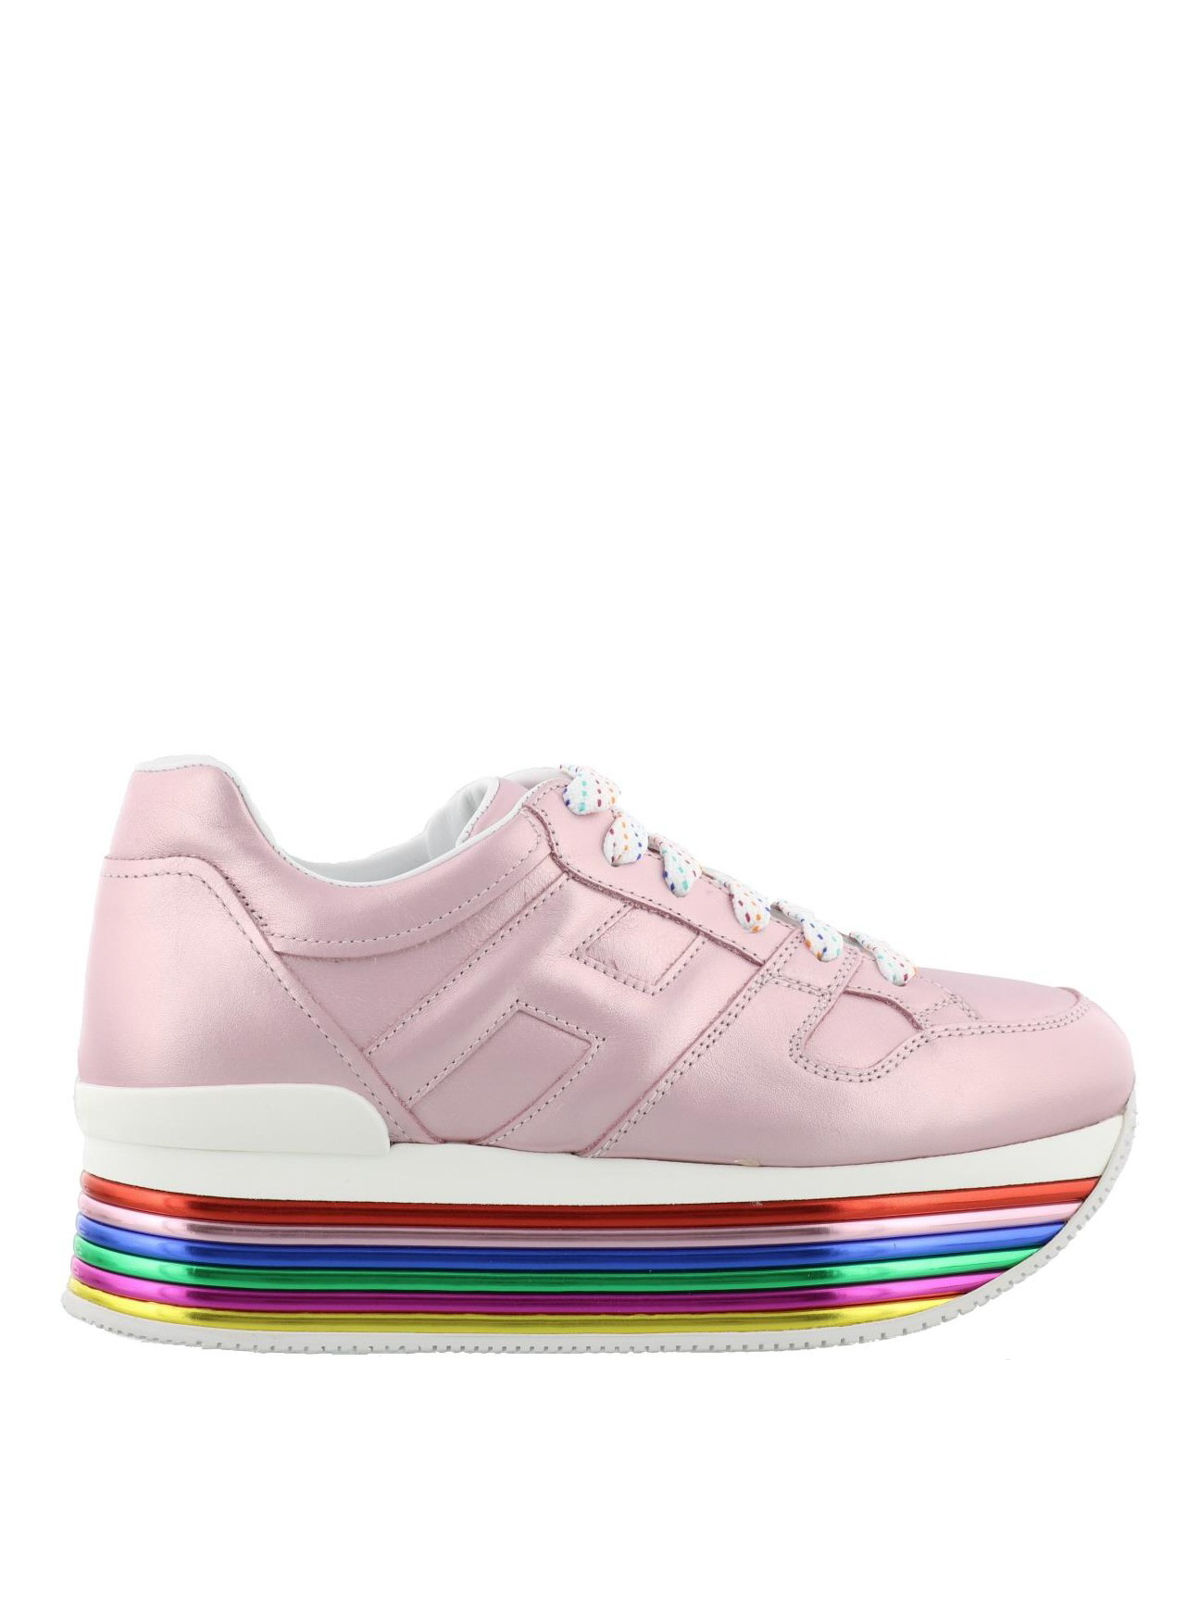 Hogan - Sneaker Maxi H222 rosa laminato - sneakers - GYW3520T548SV0M417